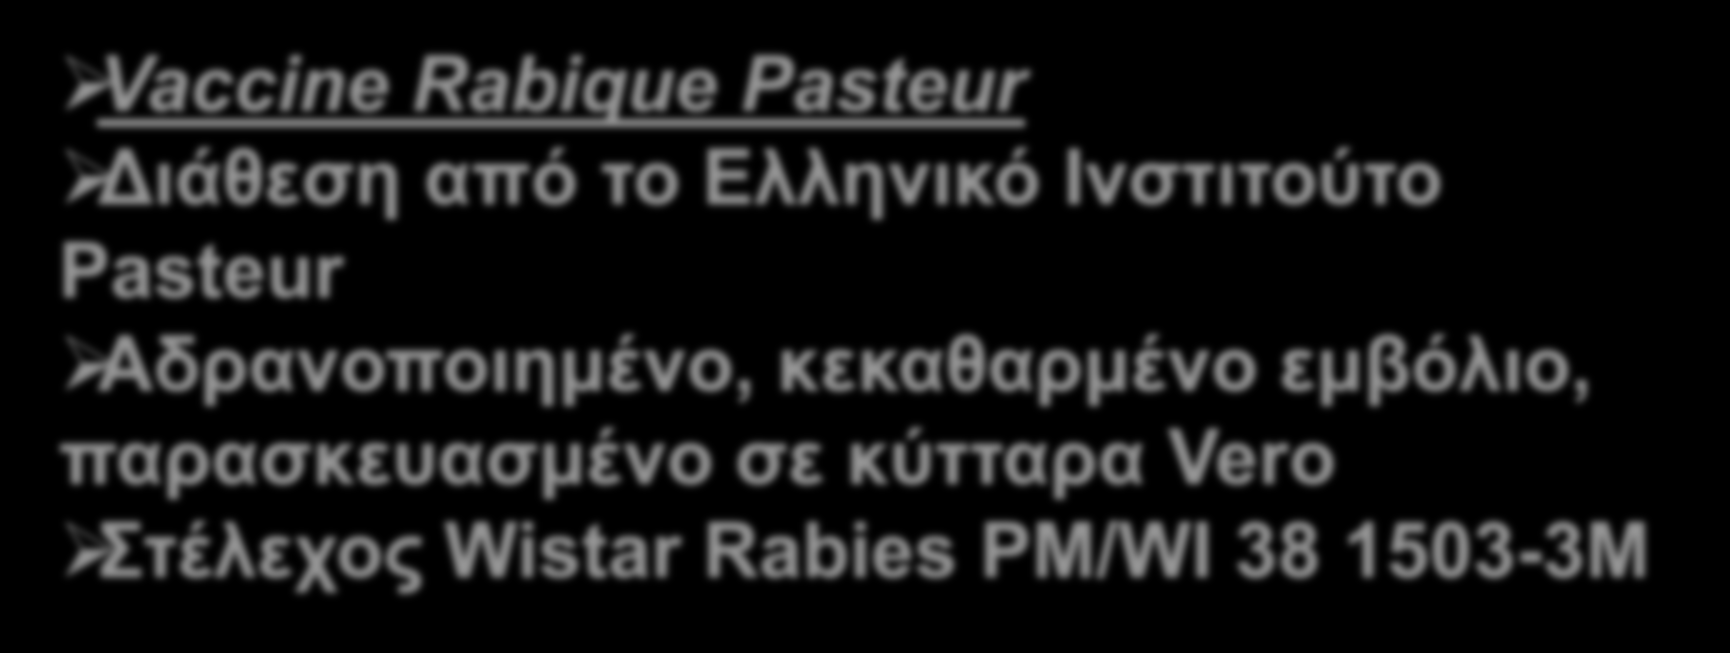 Vaccine Rabique Pasteur Διάθεση από το Ελληνικό Ινστιτούτο Pasteur Αδρανοποιημένο,